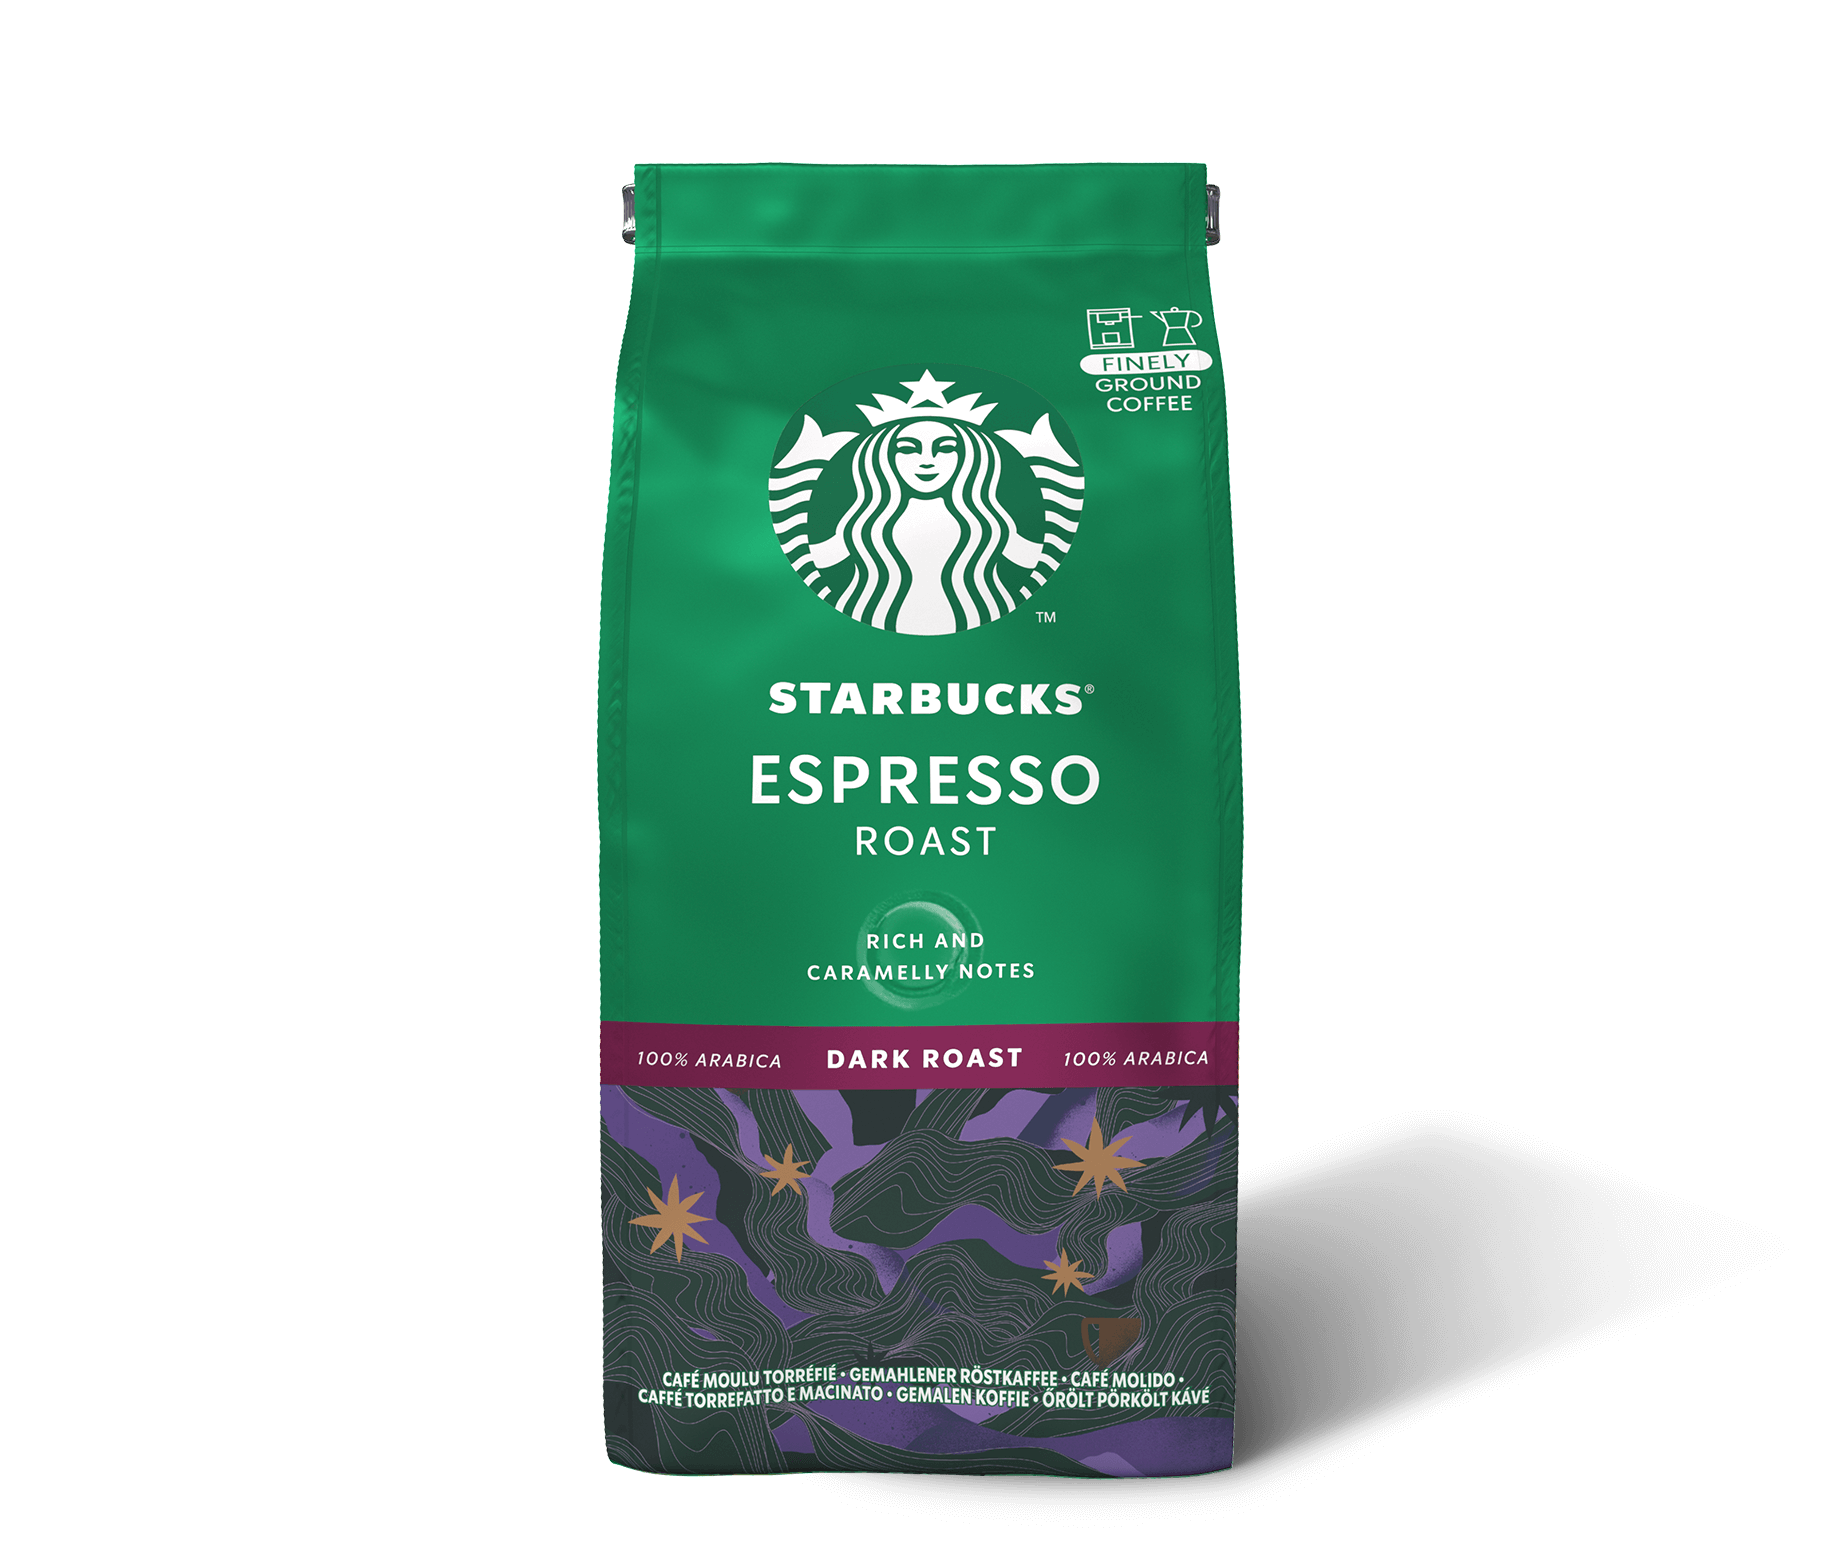 پودر قهوه اسپرسو روست استارباکس Starbucks وزن 200 گرم